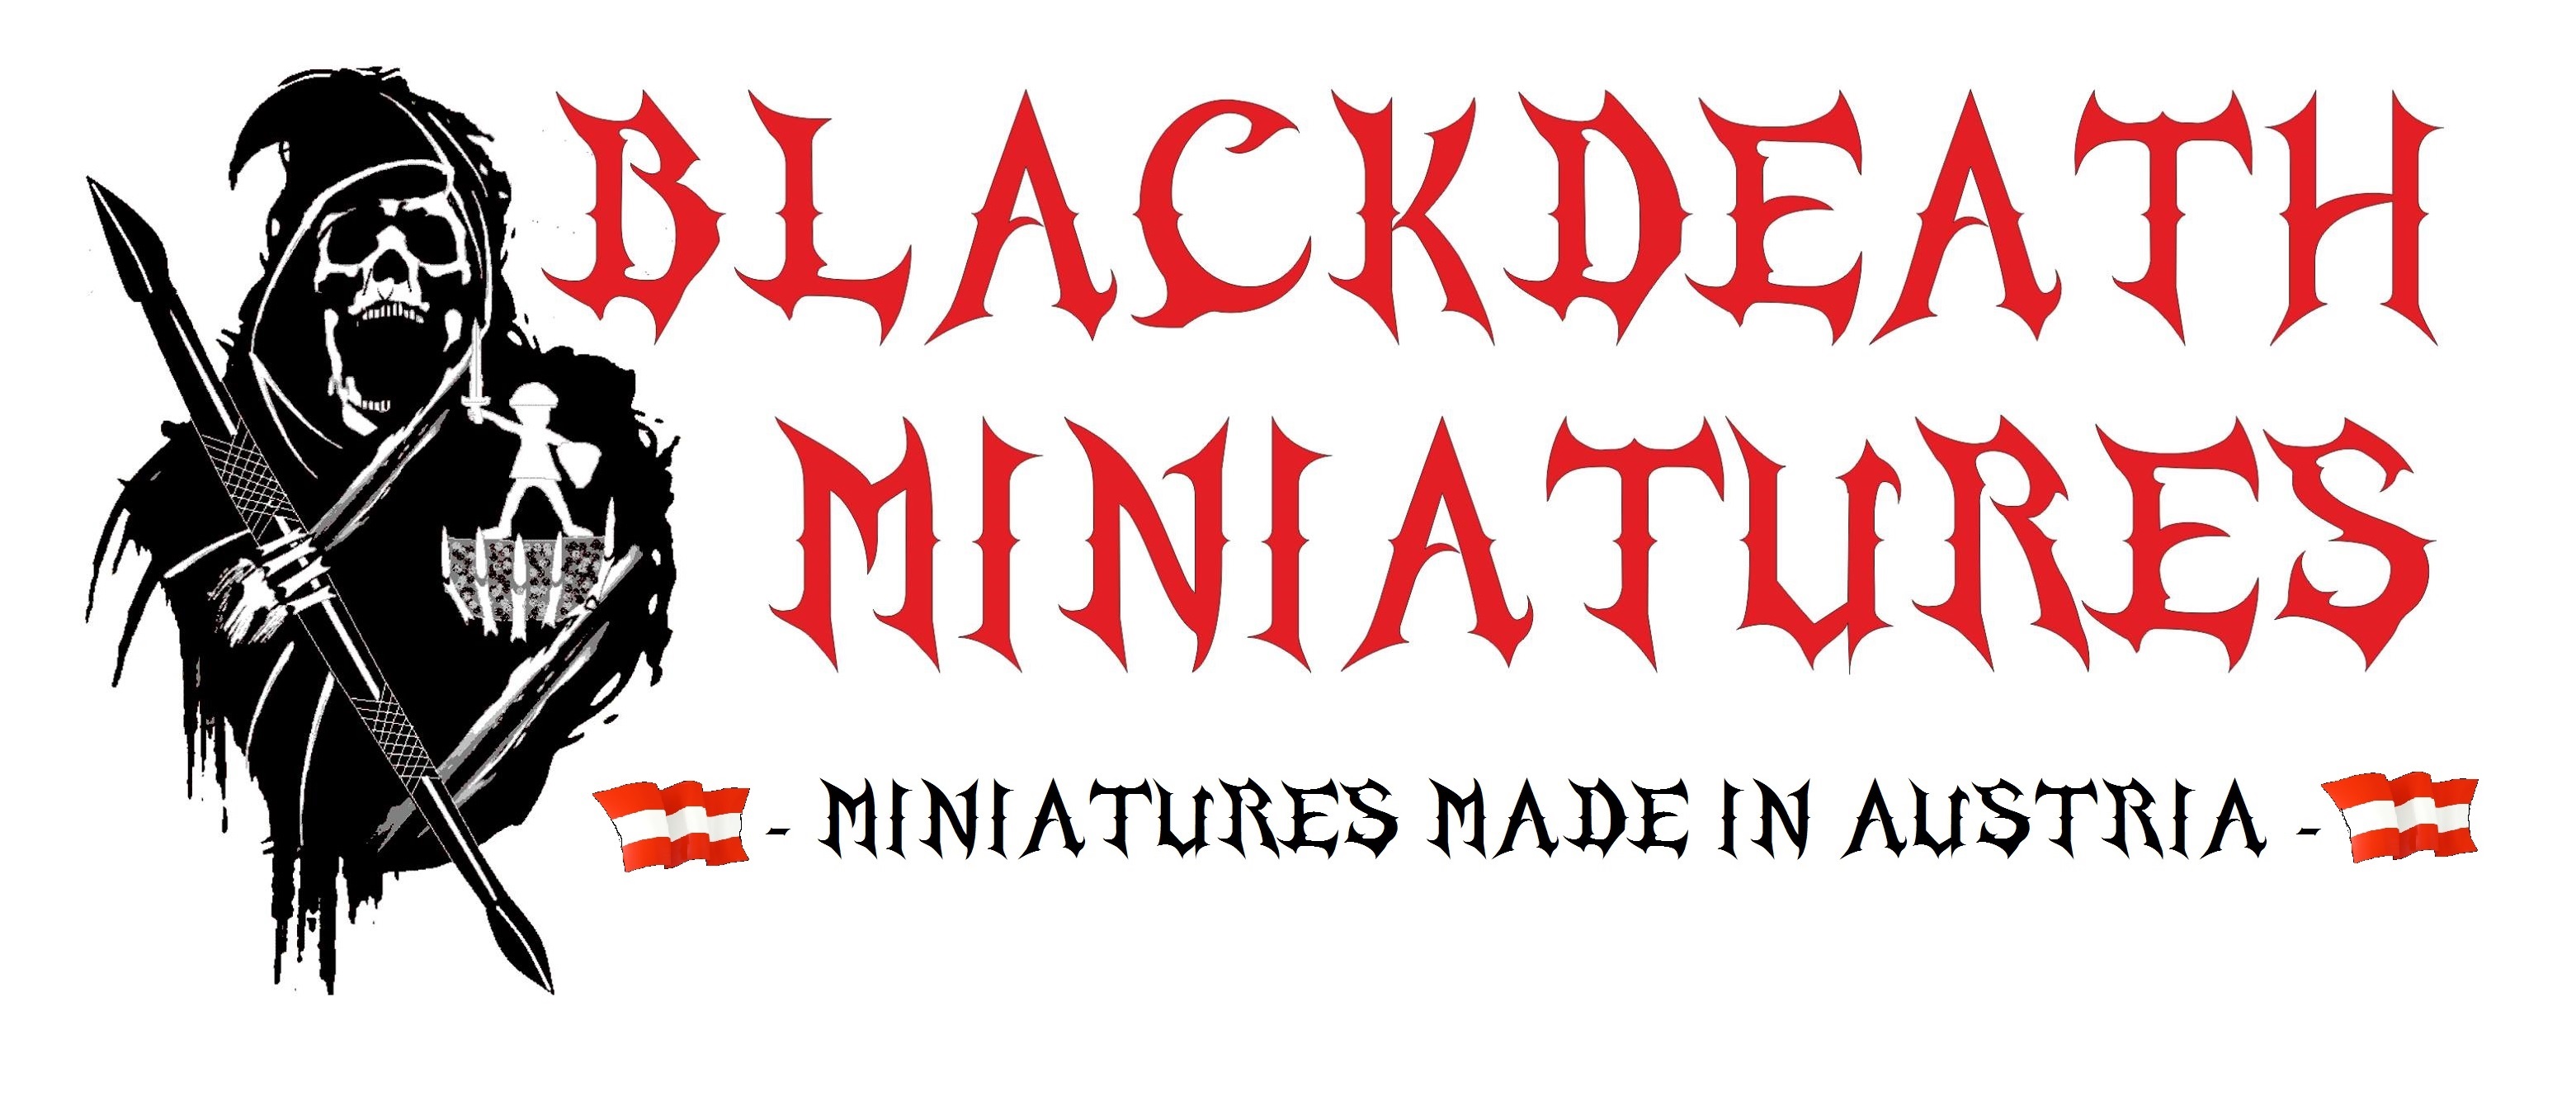 Blackdeath Miniatures